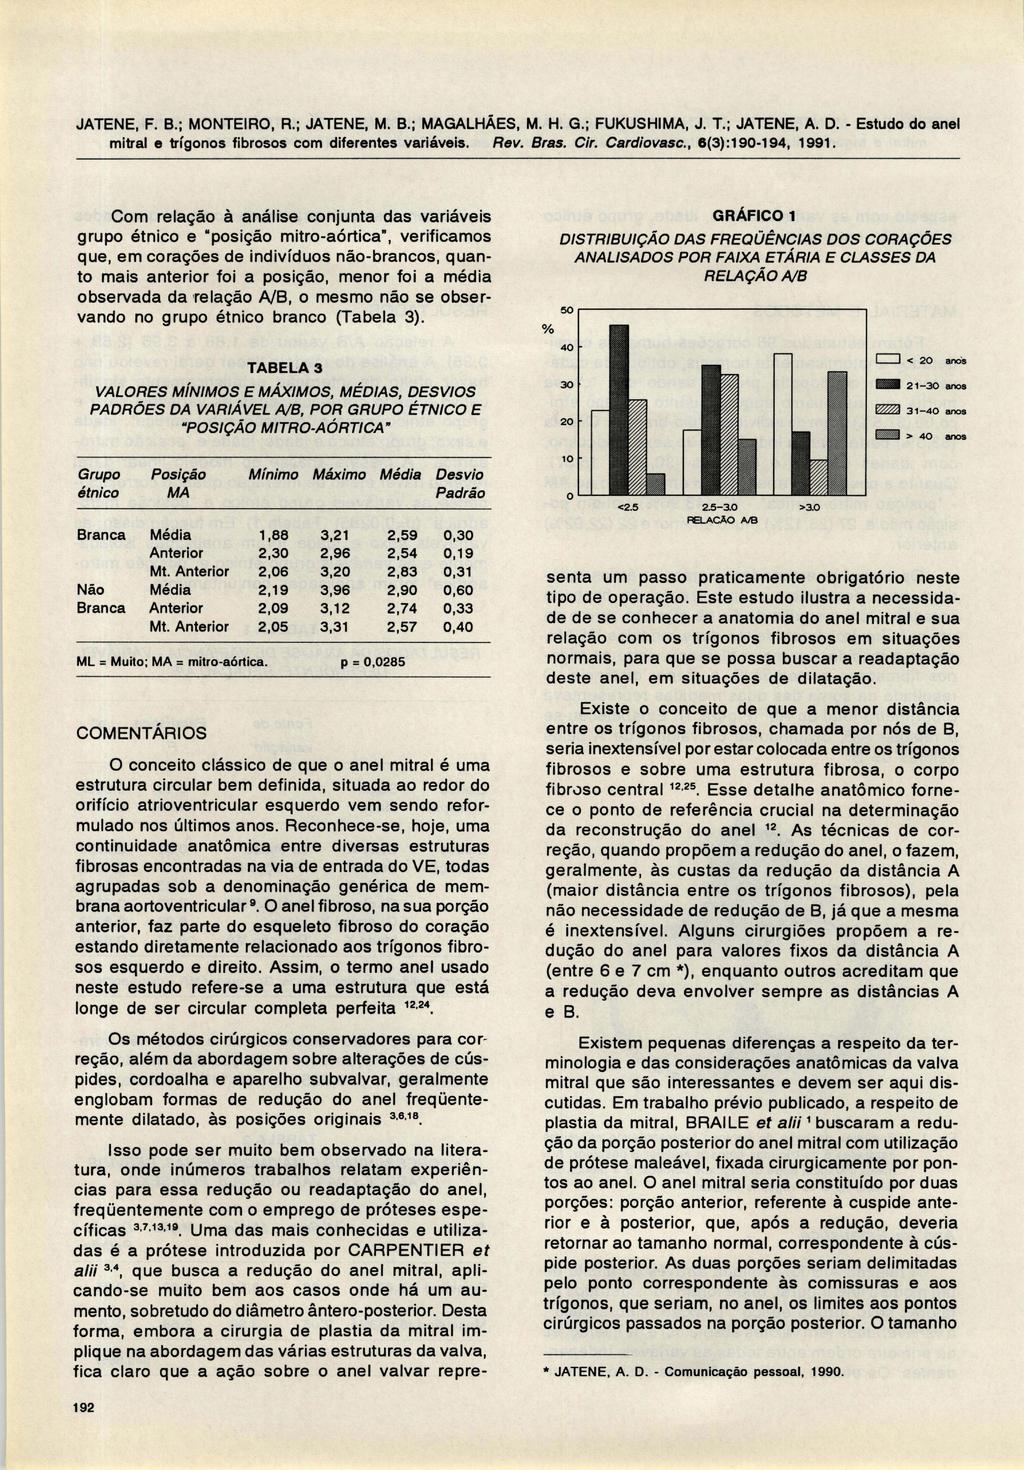 JATENE, F. B.; MONTEIRO, R.; JATENE, M. B.; MAGALHÃES, M. H. G.; FUKUSHIMA, J. T.; JATENE, A. D. - Estudo do anel Rev. Bras. Cir. Cardiovasc., 8(3):190-194, 1991.